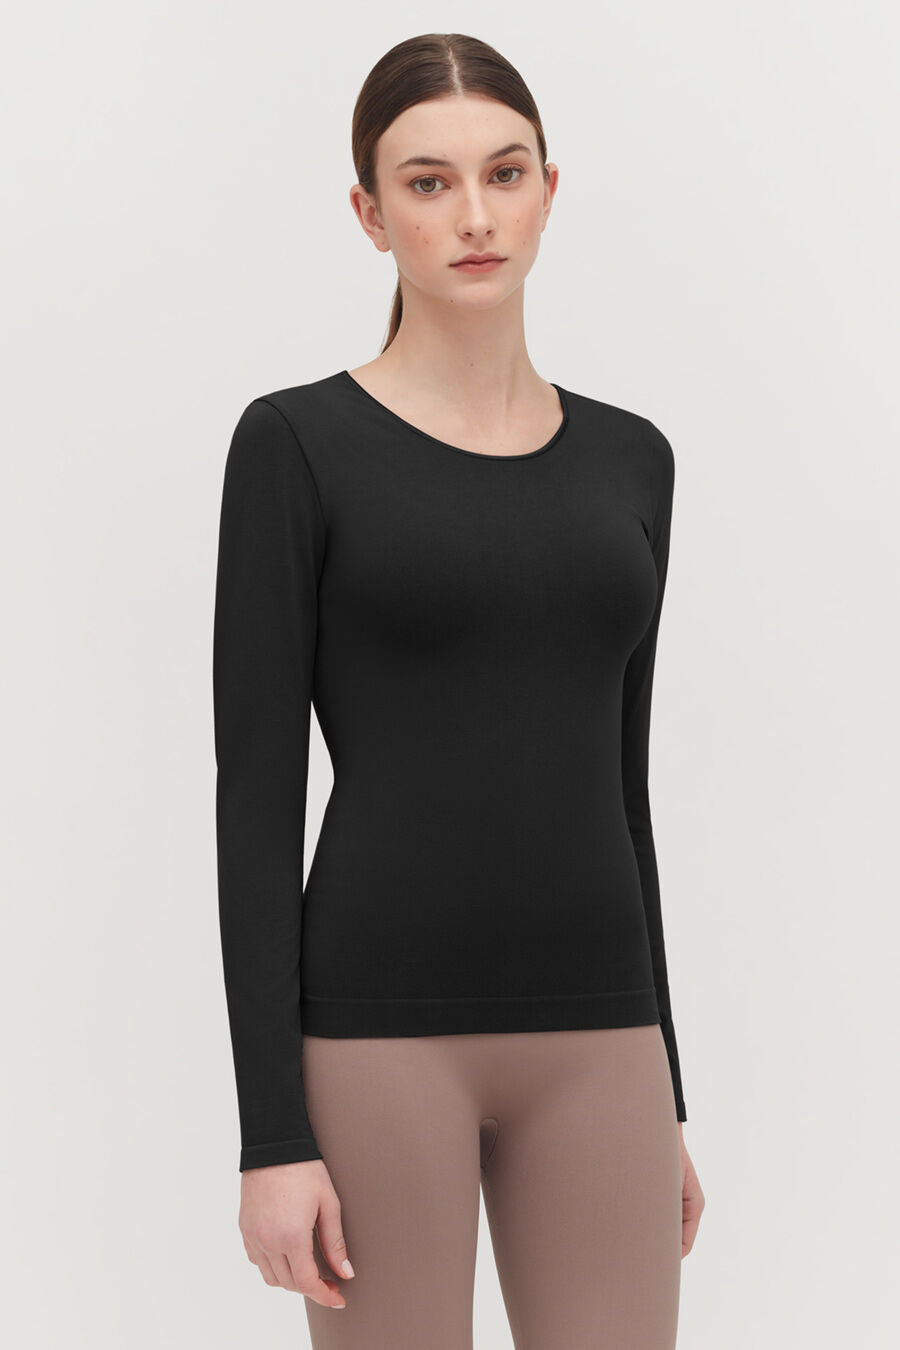 fartey Long Sleeve Bodysuit for Women Black Square Neck Stretchy